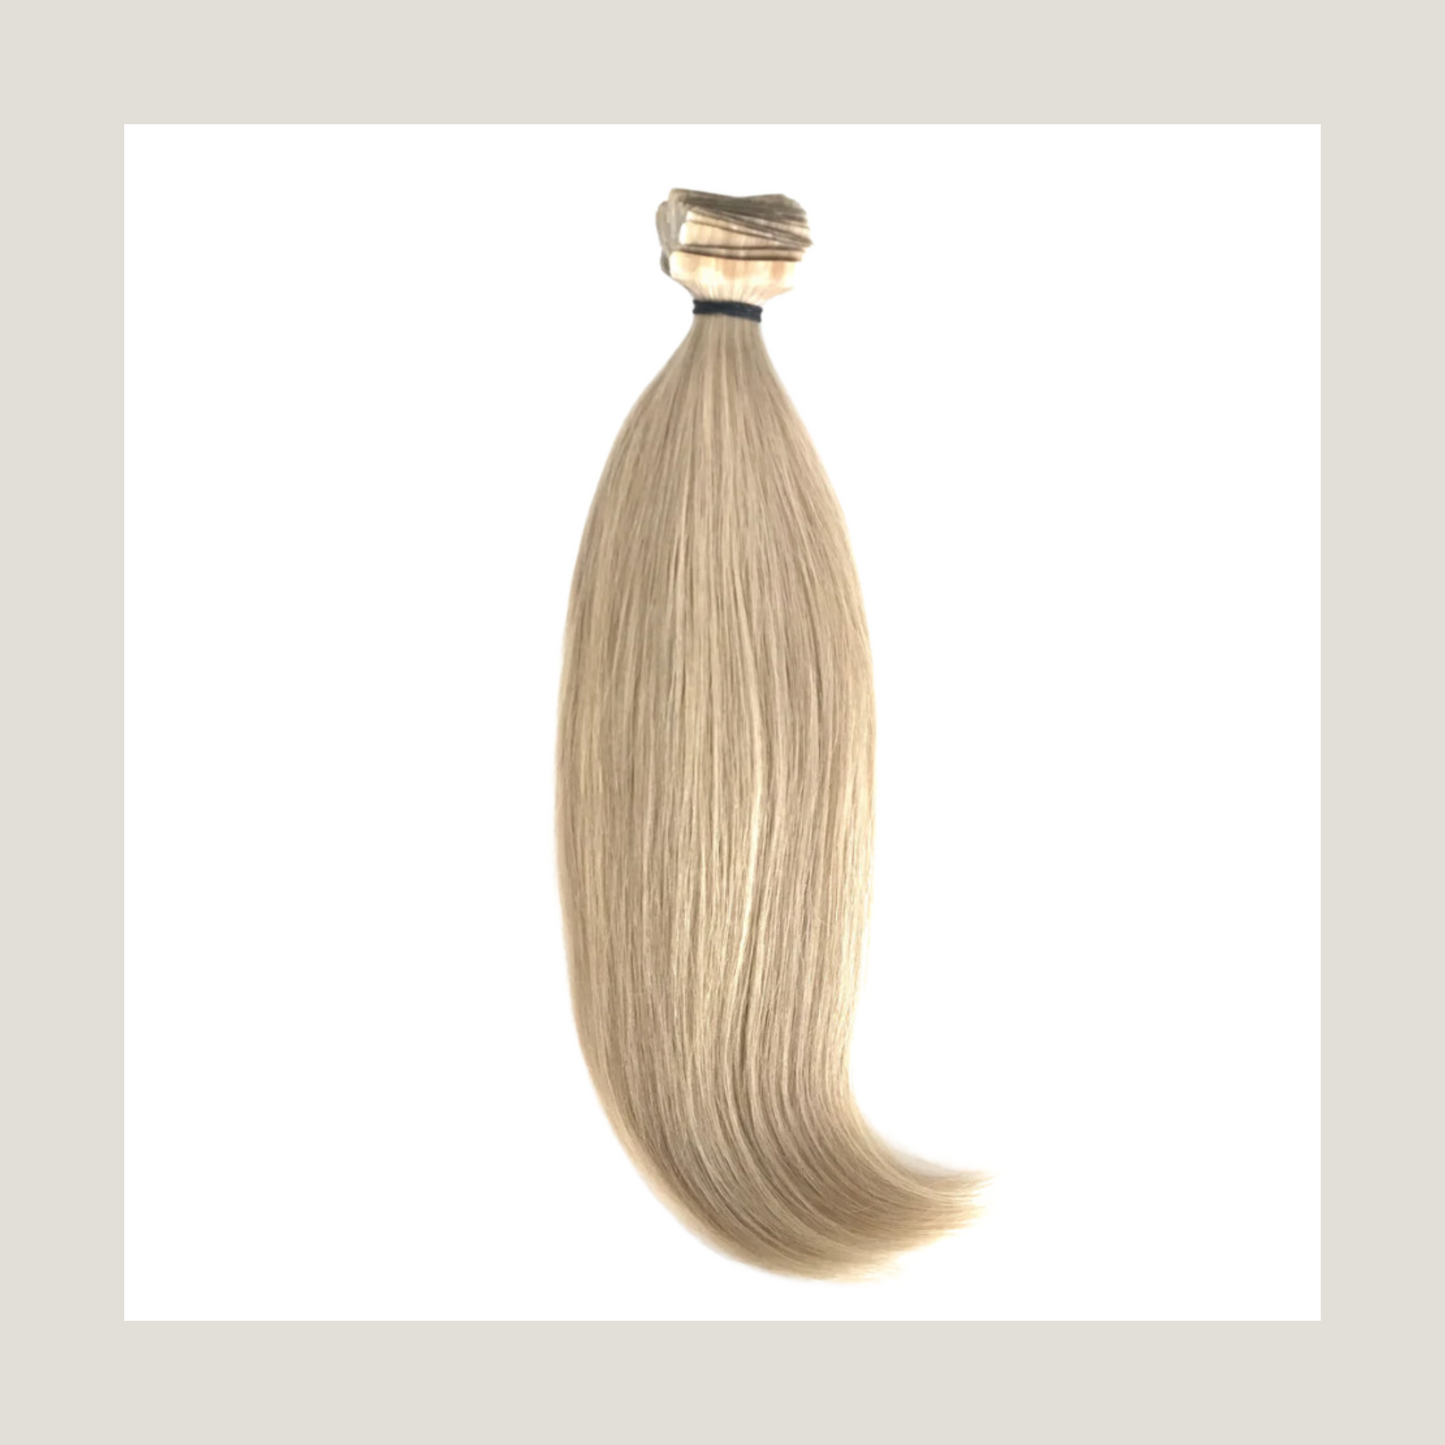 Cabello humano virgen europeo Remy, extensiones de cabello con cinta